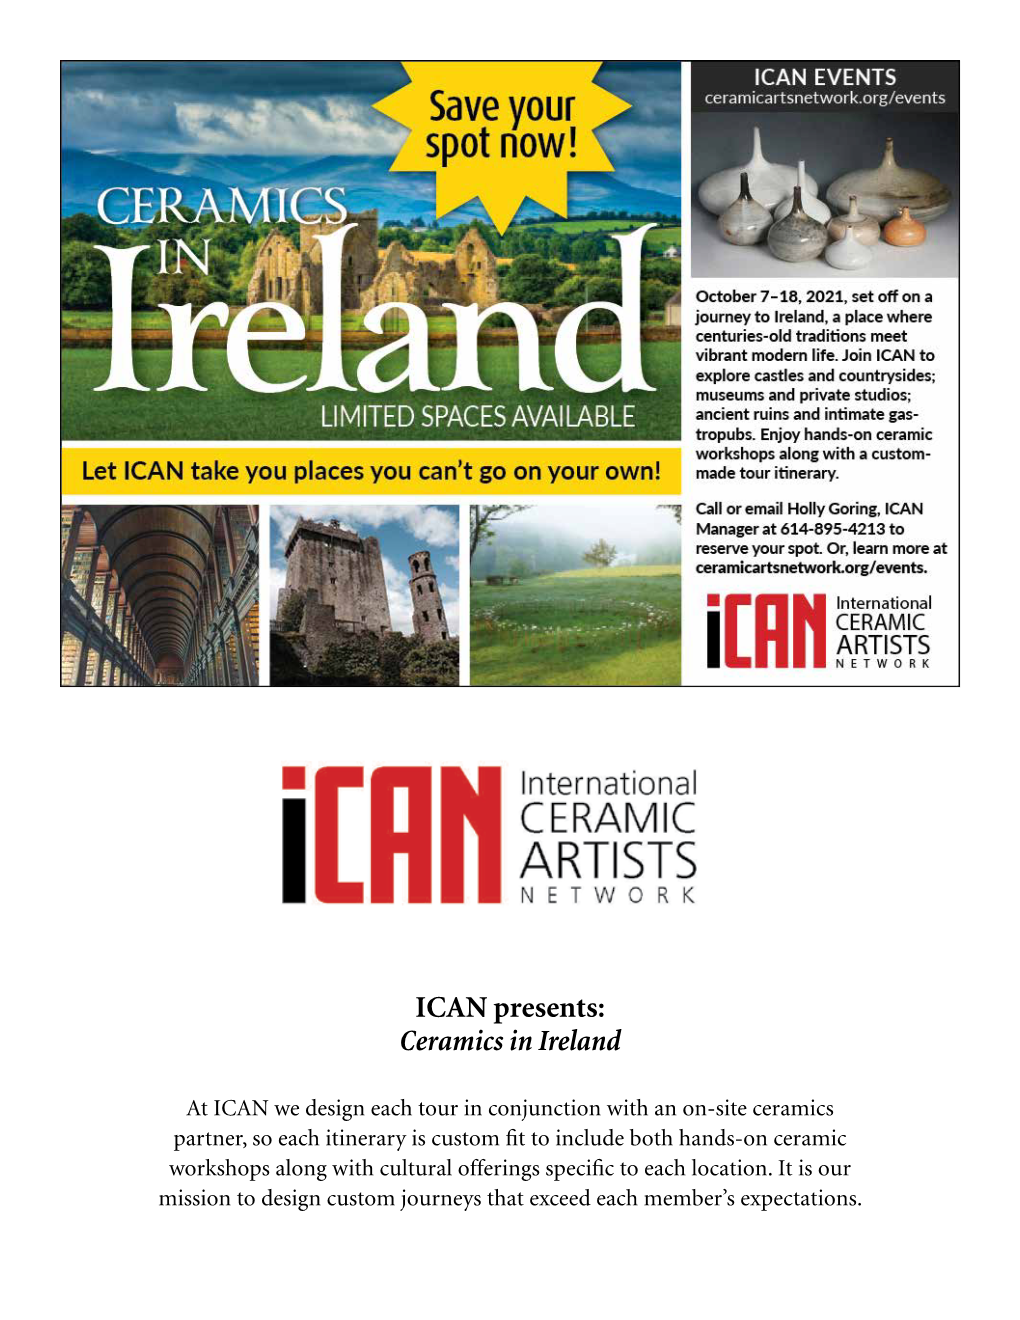 ICAN Presents: Ceramics in Ireland